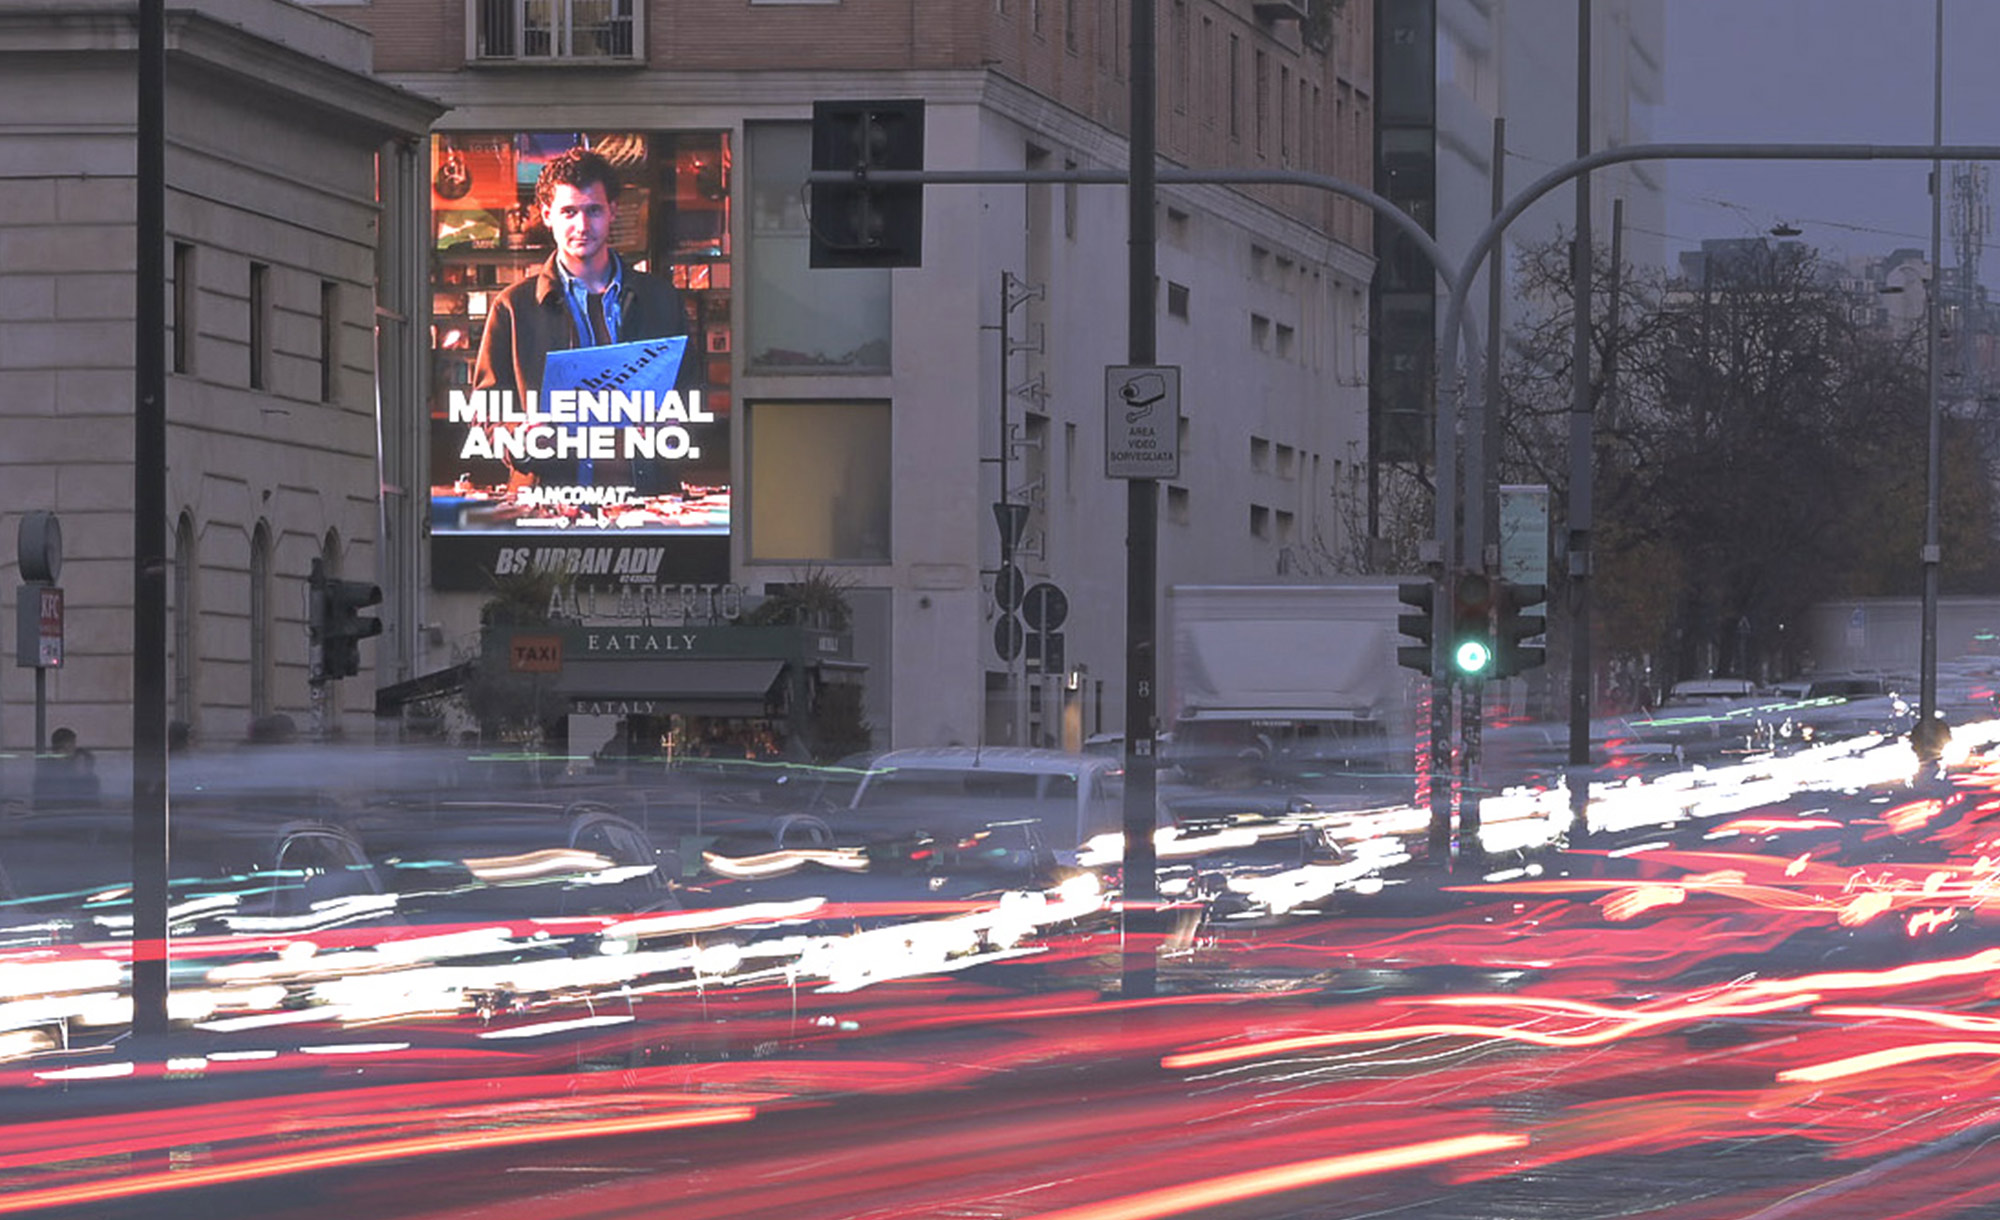 EATALY LEDwalls in Milan by Streetvox